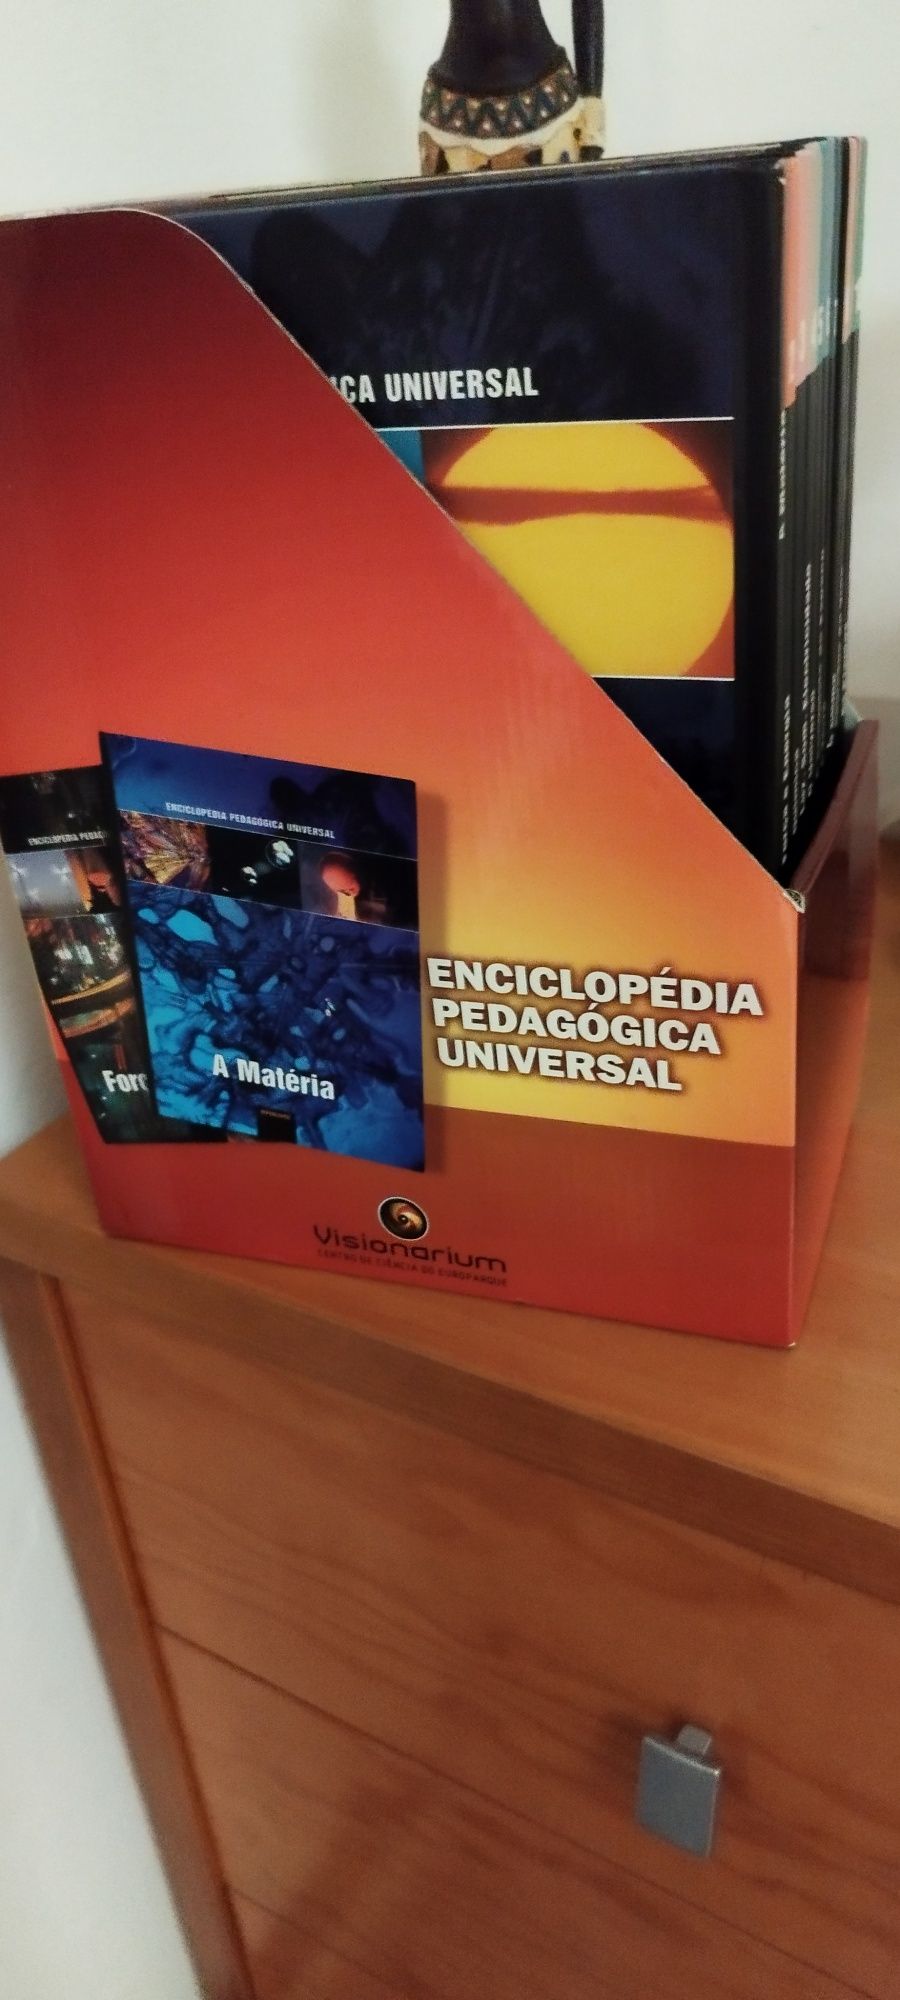 Enciclopédia pedagógica universal